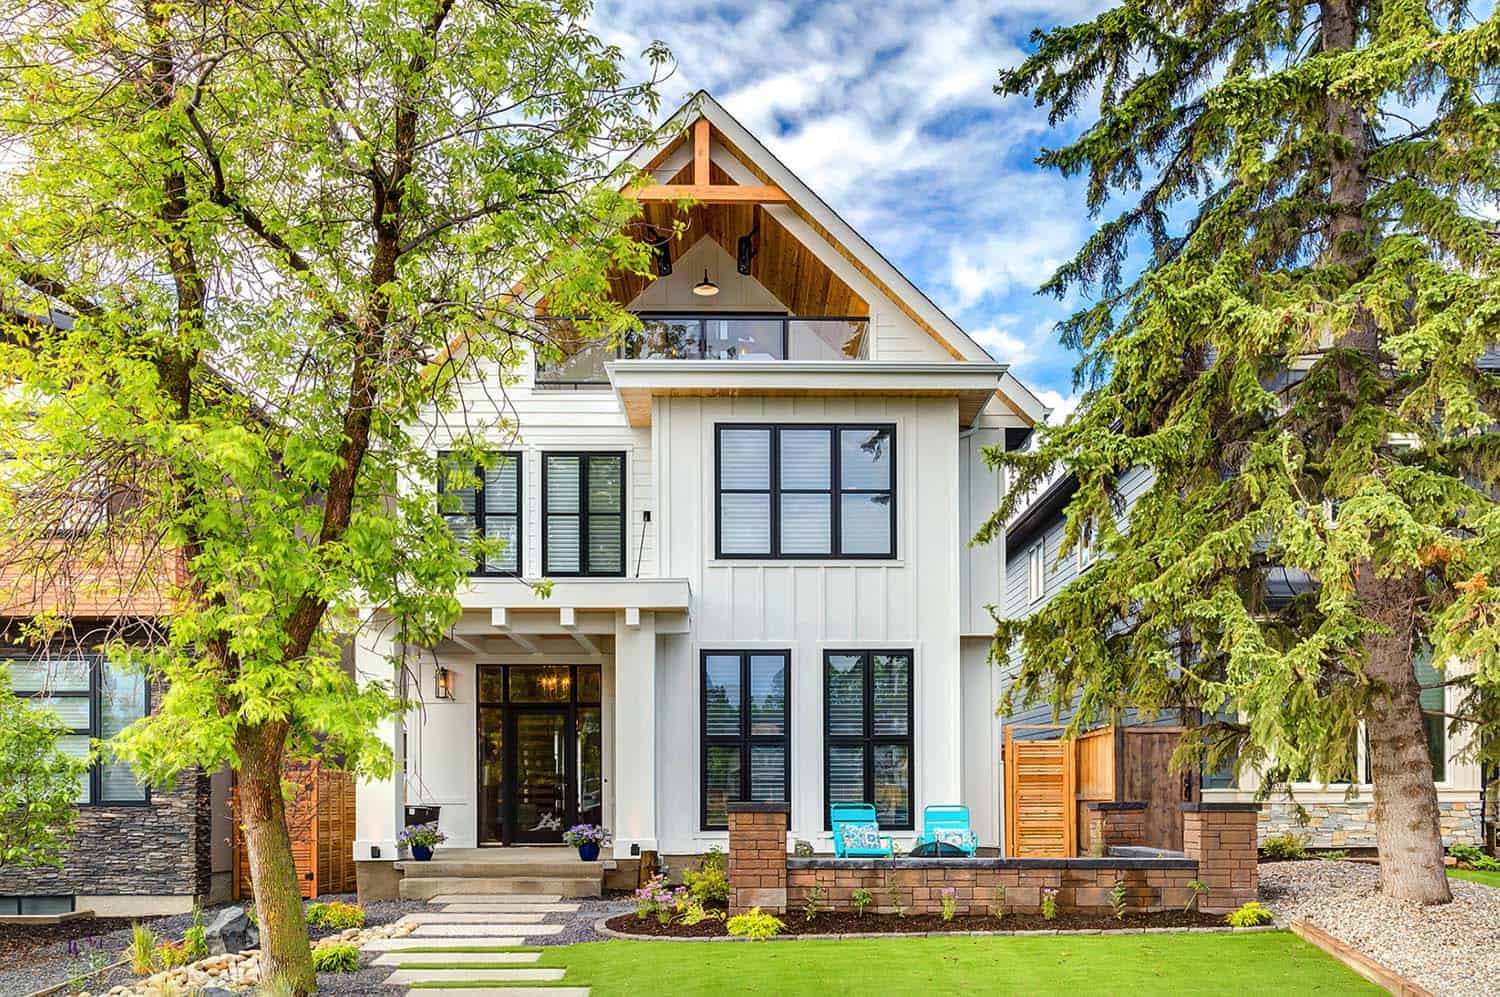 Calgary home radiates with fresh, modern farmhouse style